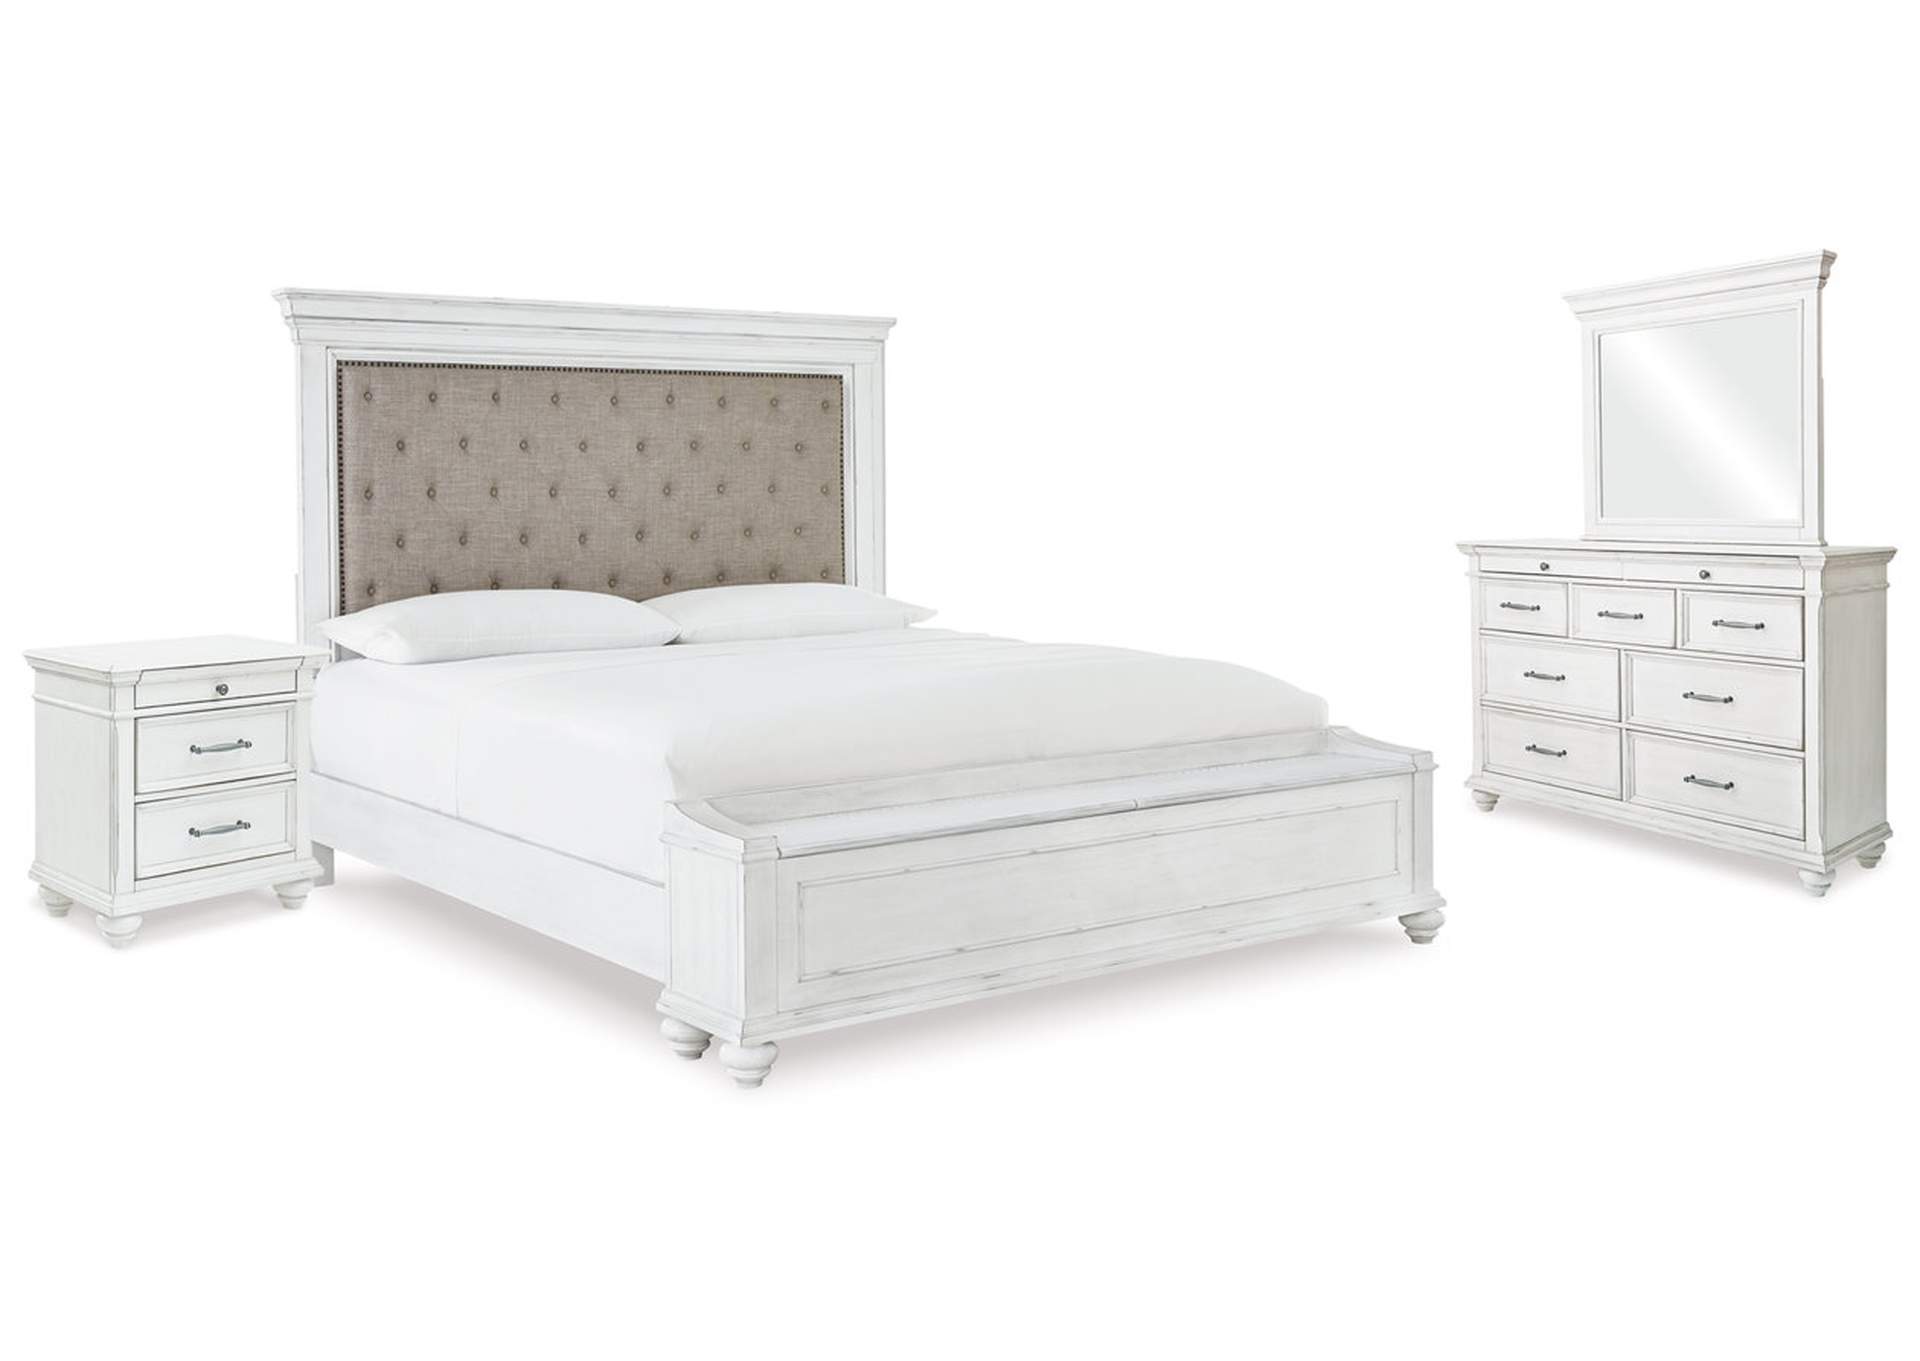 Kanwyn King Upholstered Storage Bed, Dresser, Mirror and Nightstand,Benchcraft